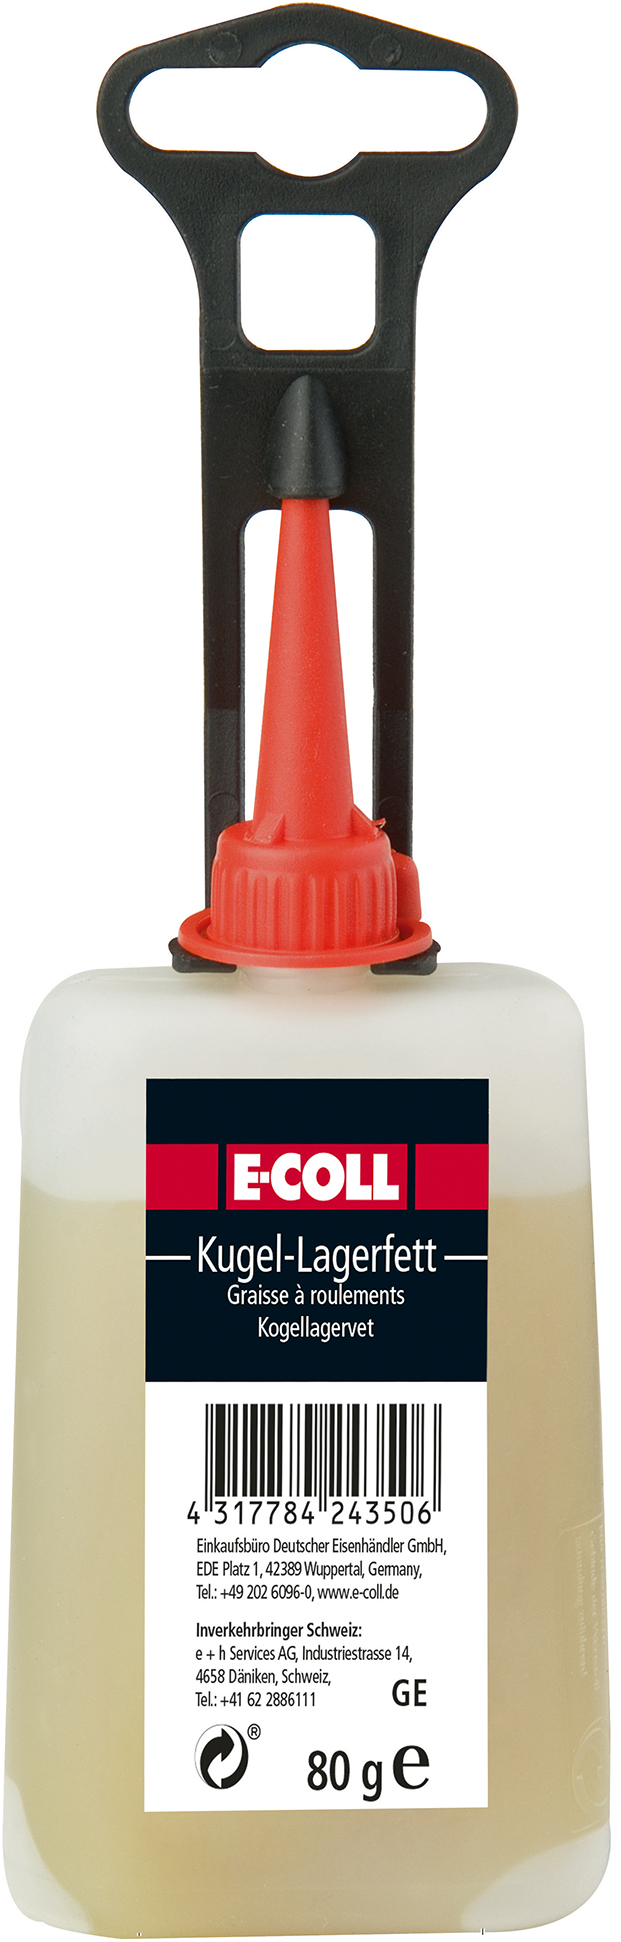 Picture of Kugellagerfett 80g Flasche E-COLL